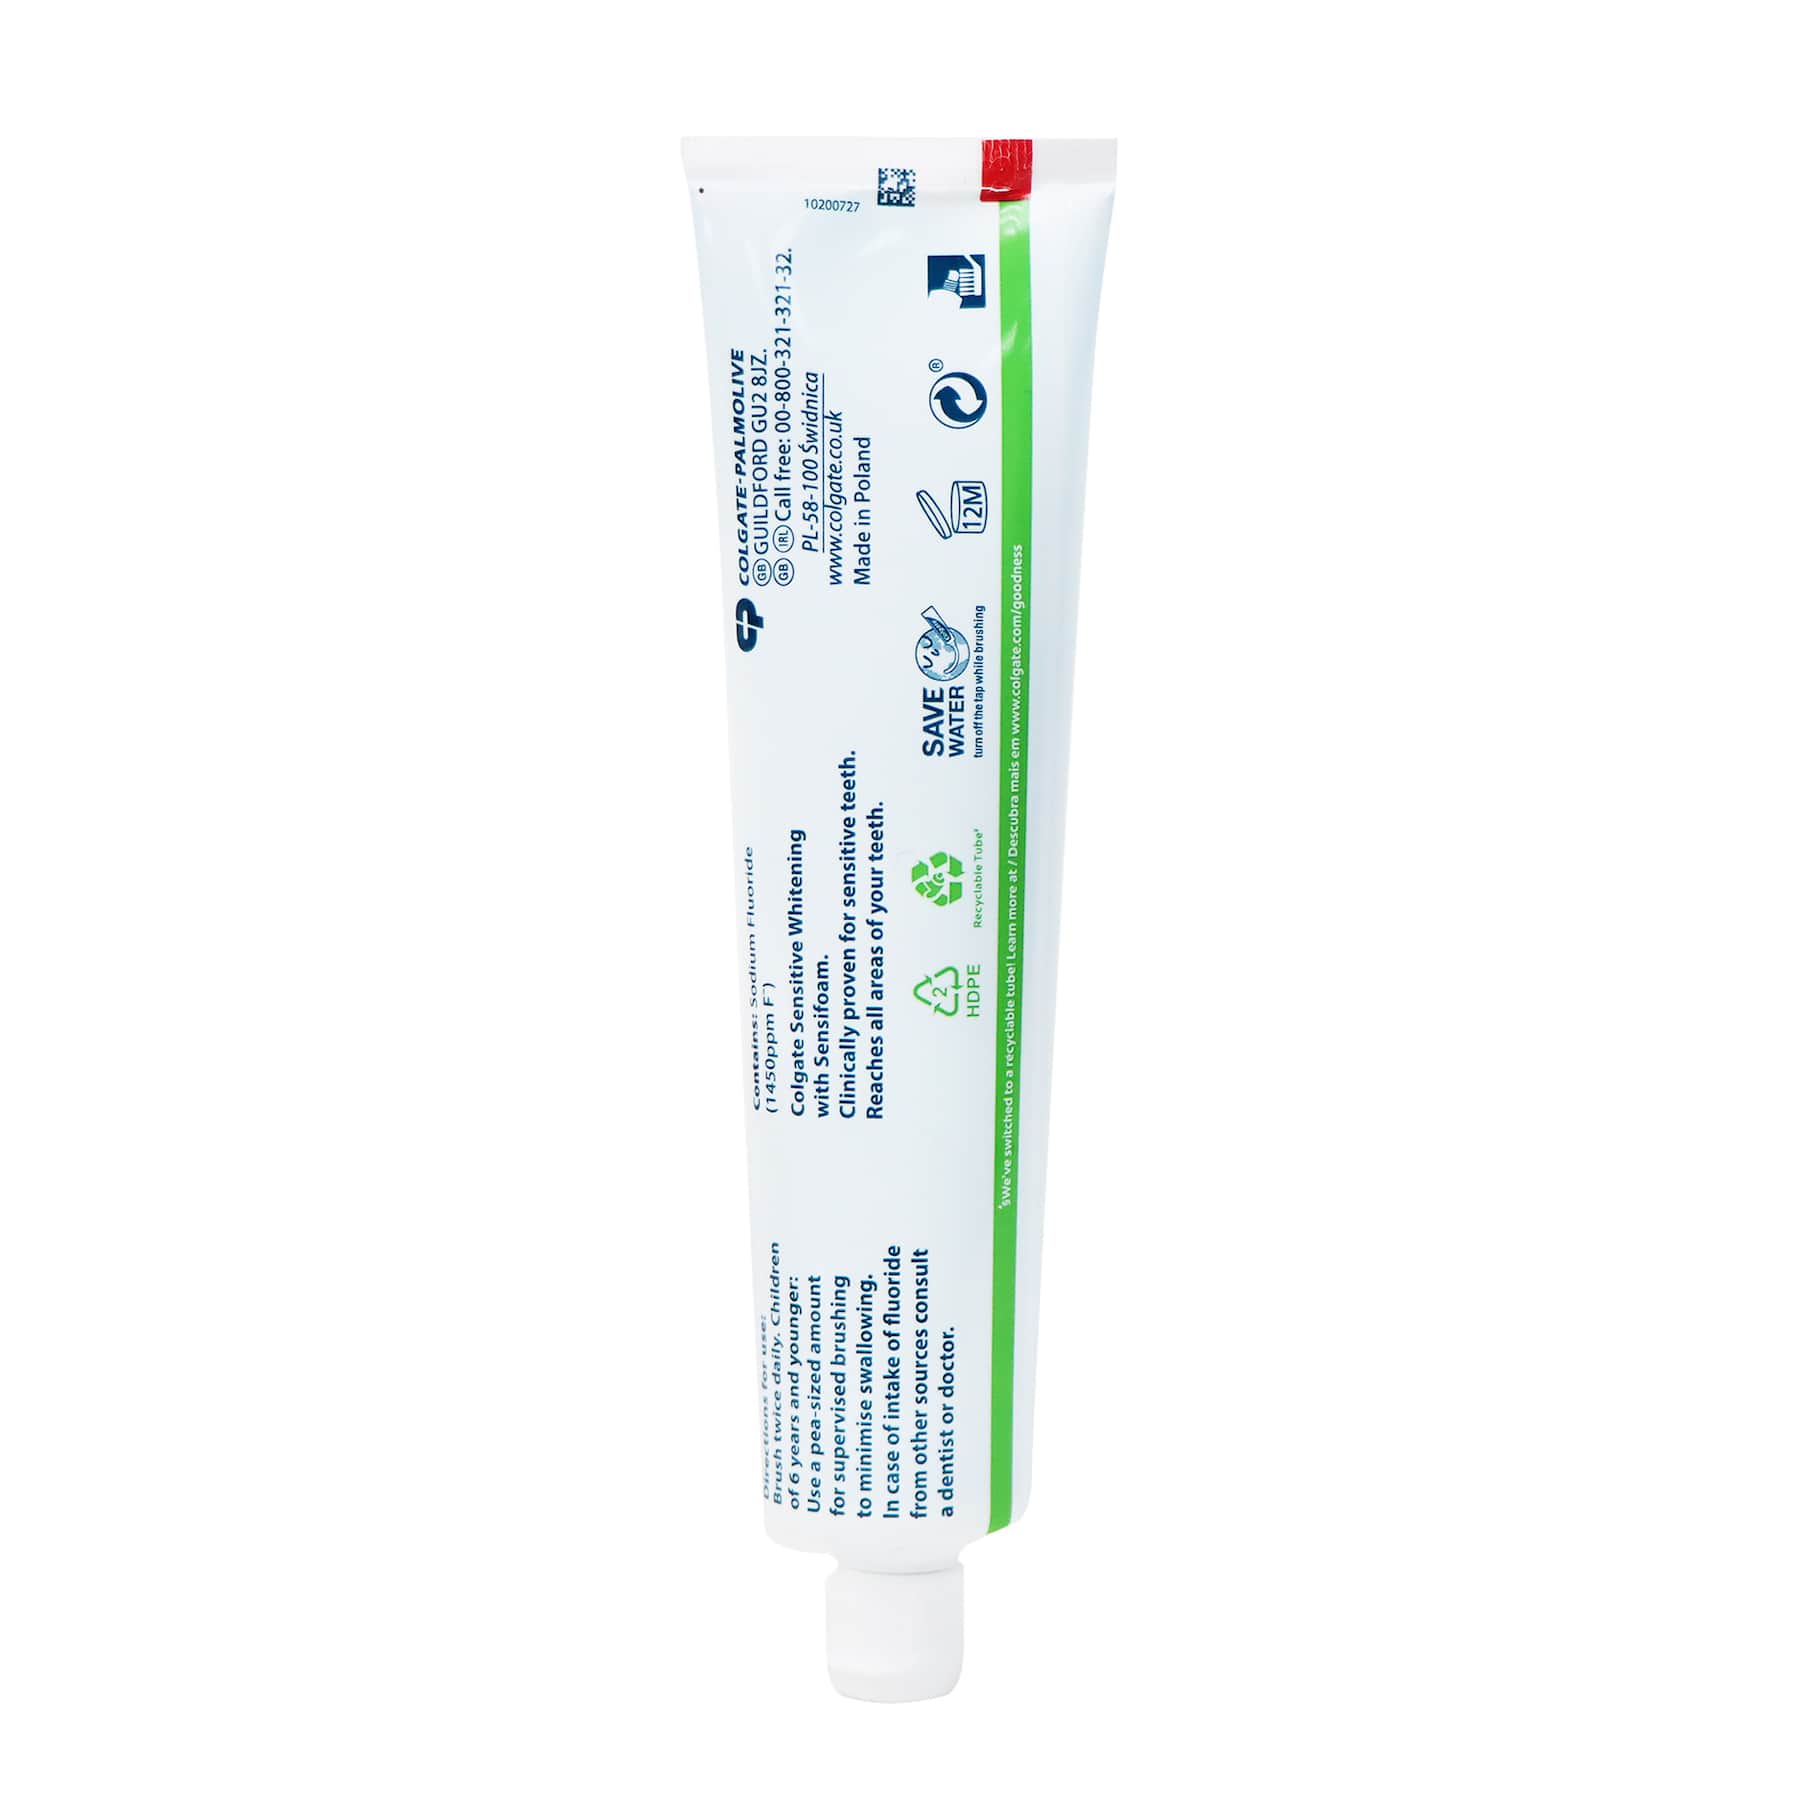 Colgate Sensitive With Sensifoam Toothpaste 125ml